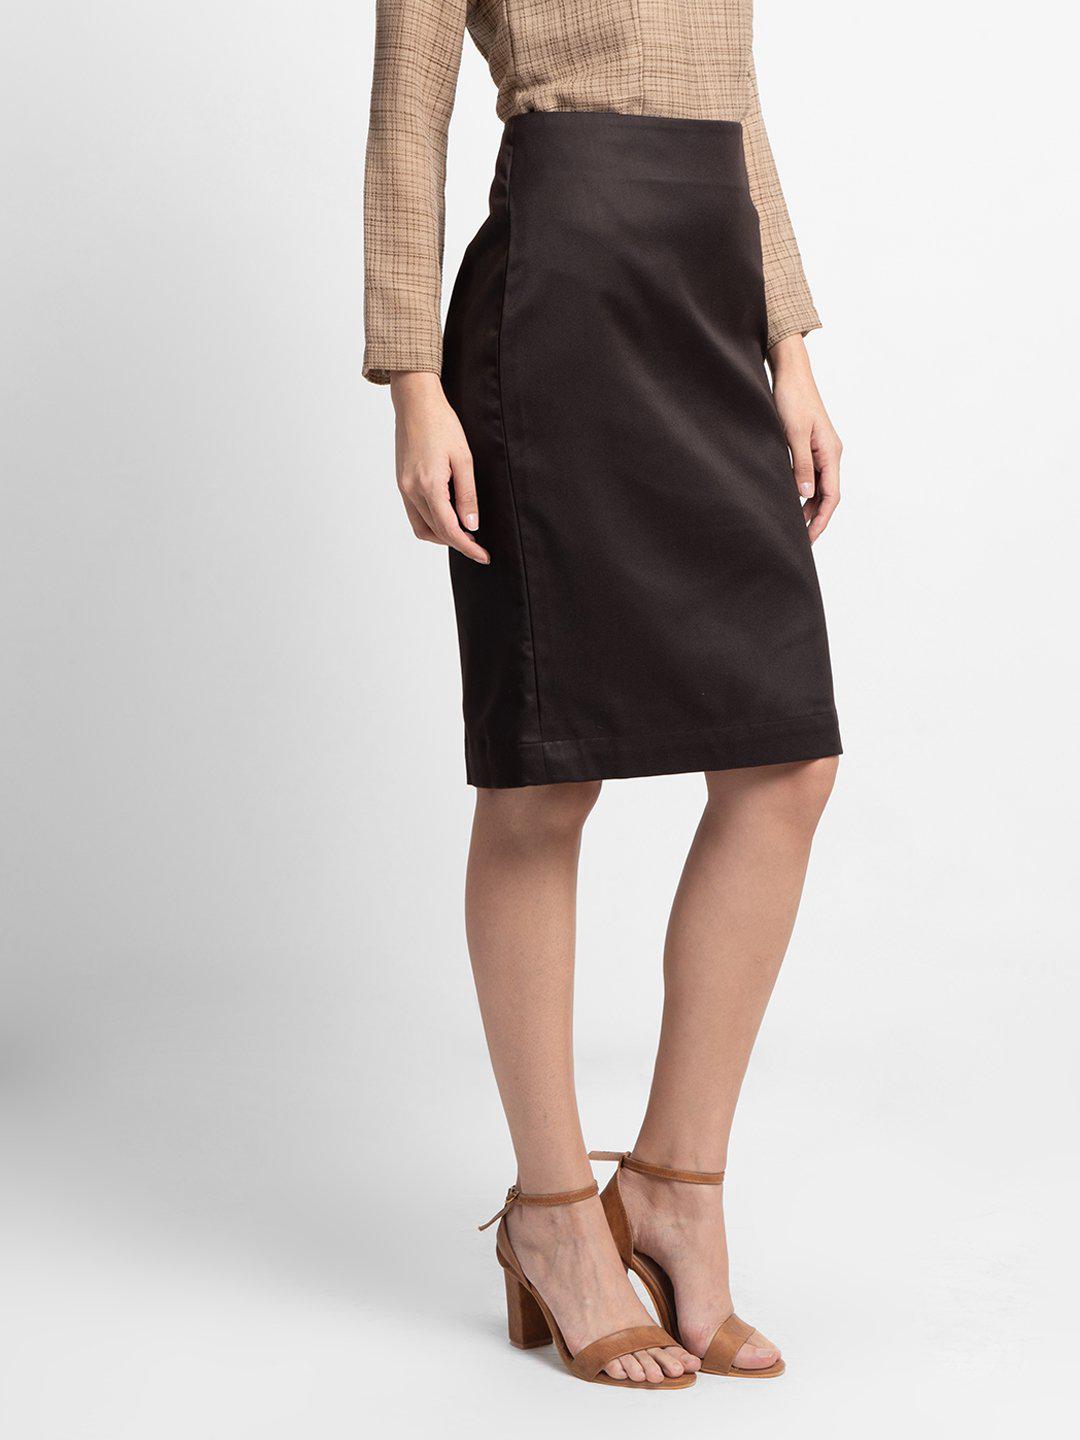 Chocolate Brown Poly Cotton Straight Skirt